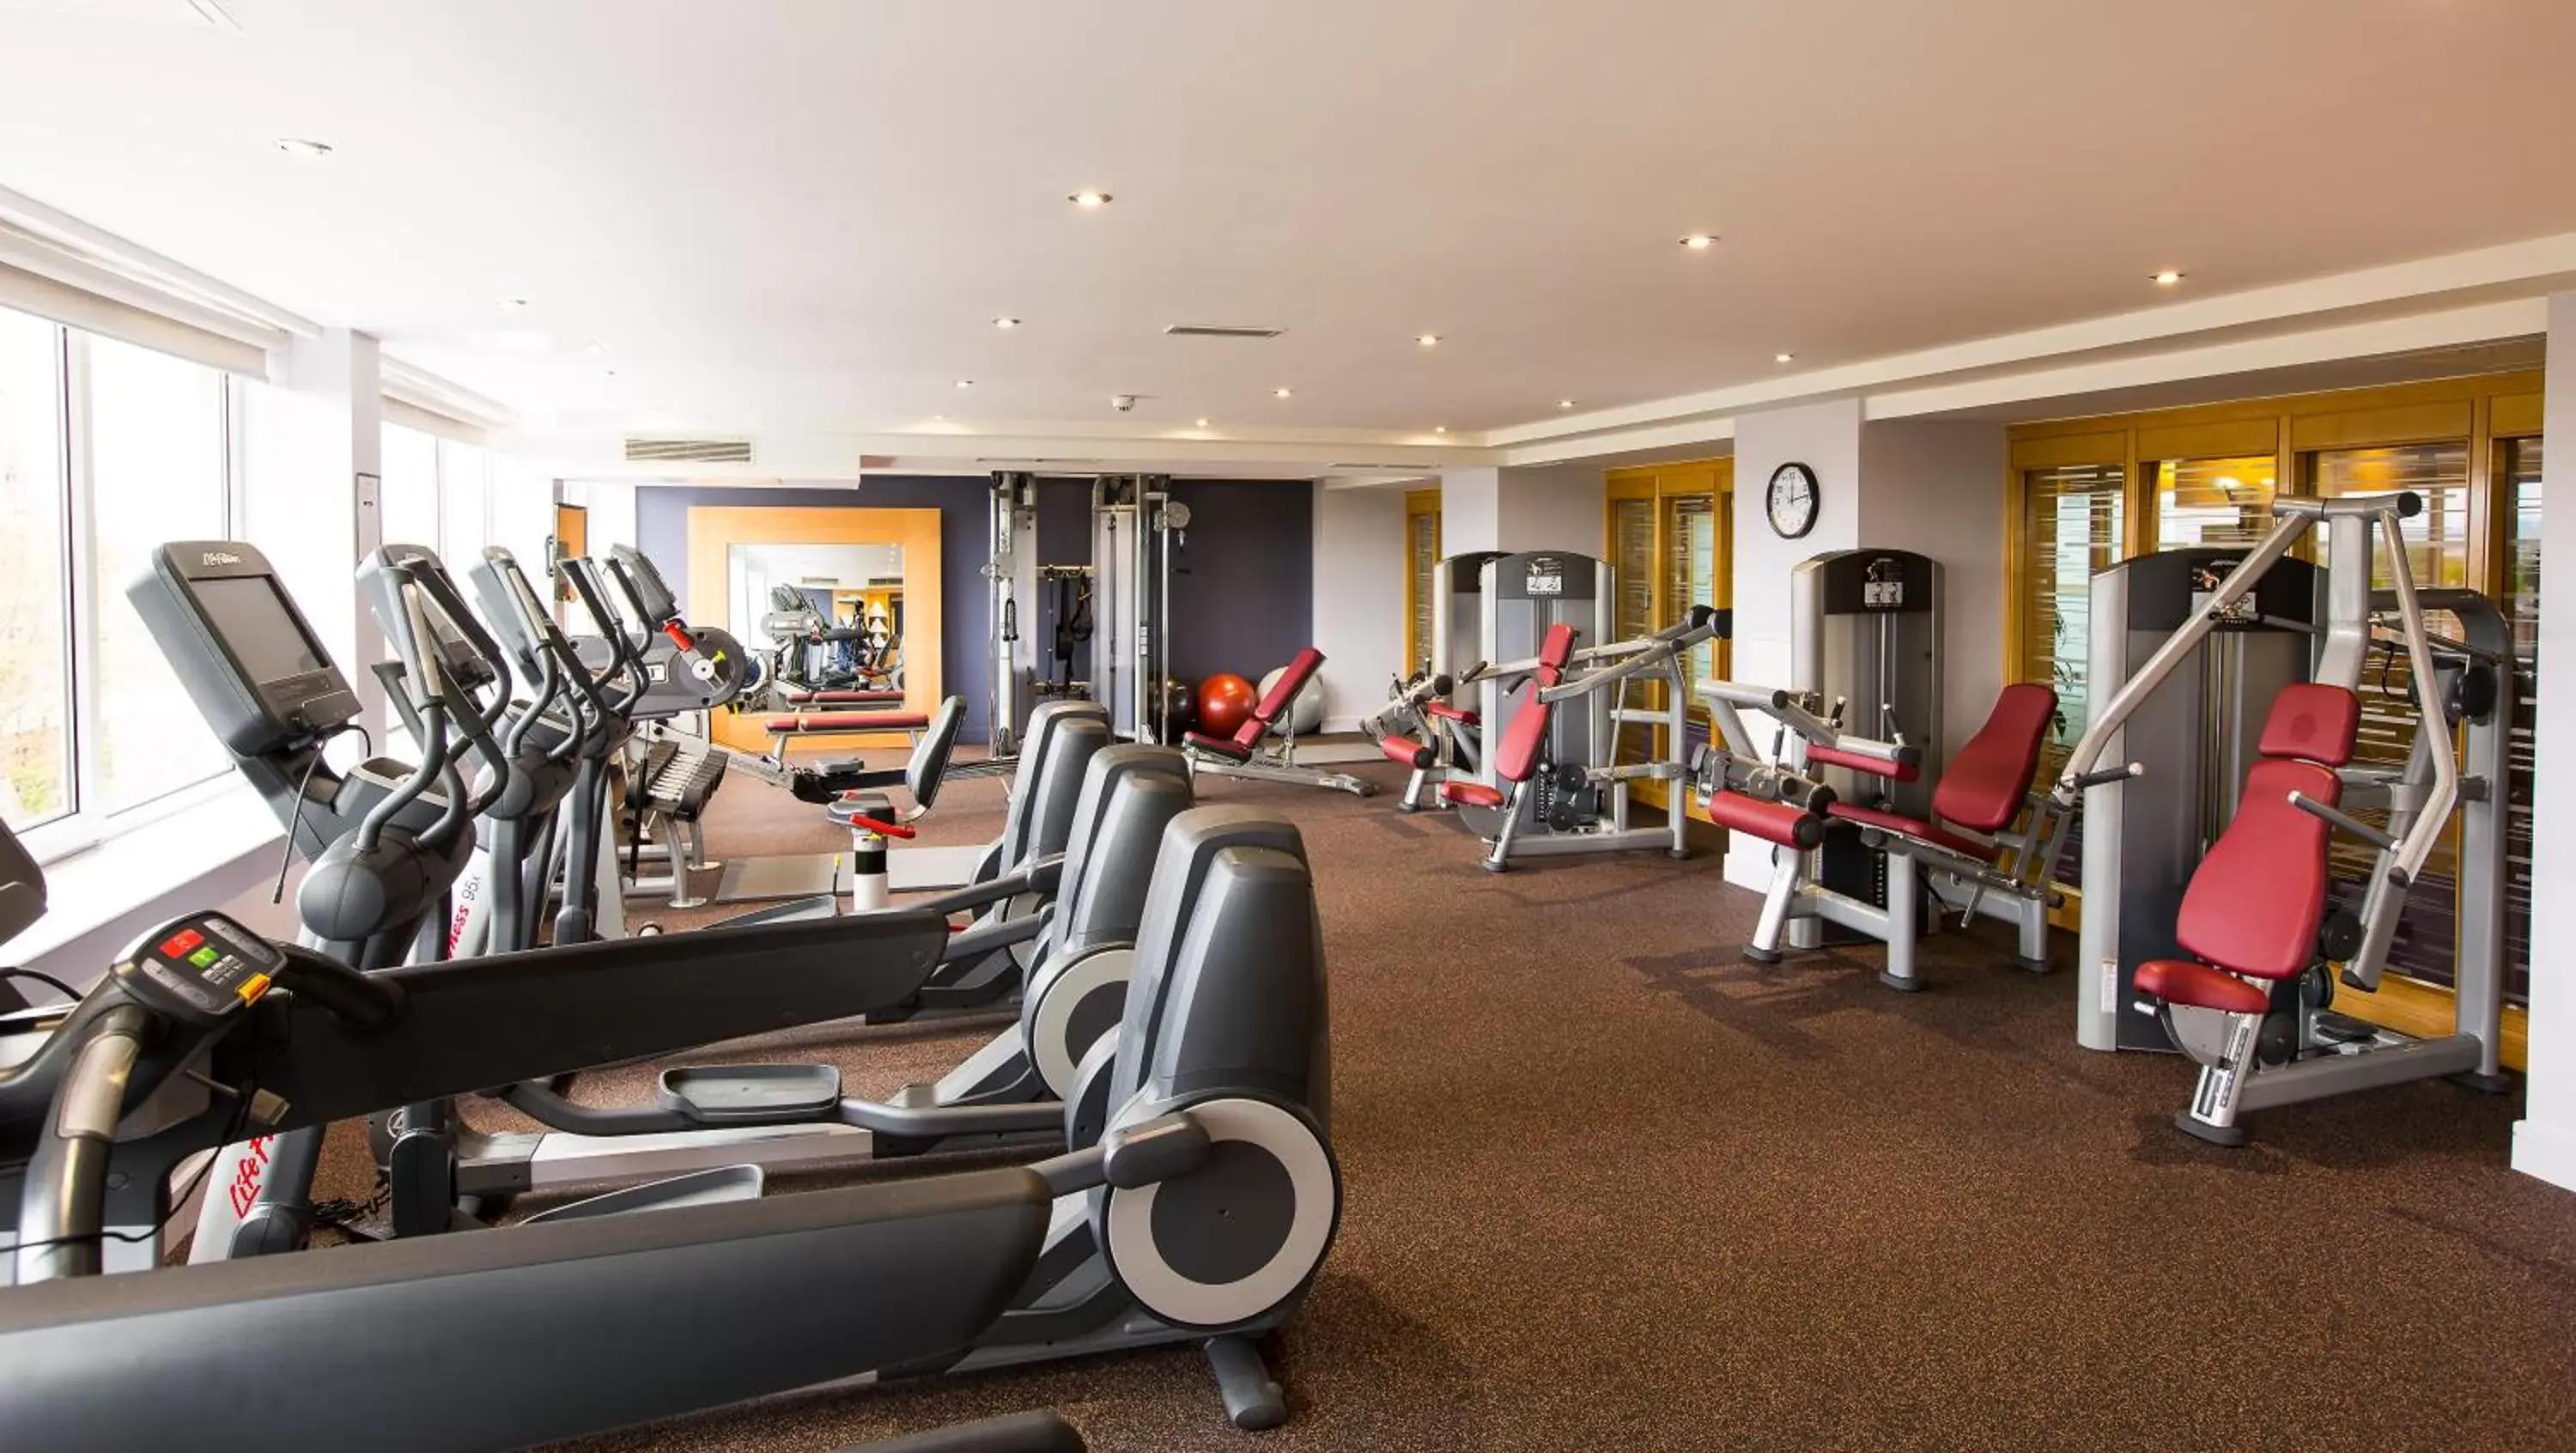 Fitness centre/facilities, Fitness Center/Facilities in Clayton Hotel Burlington Road